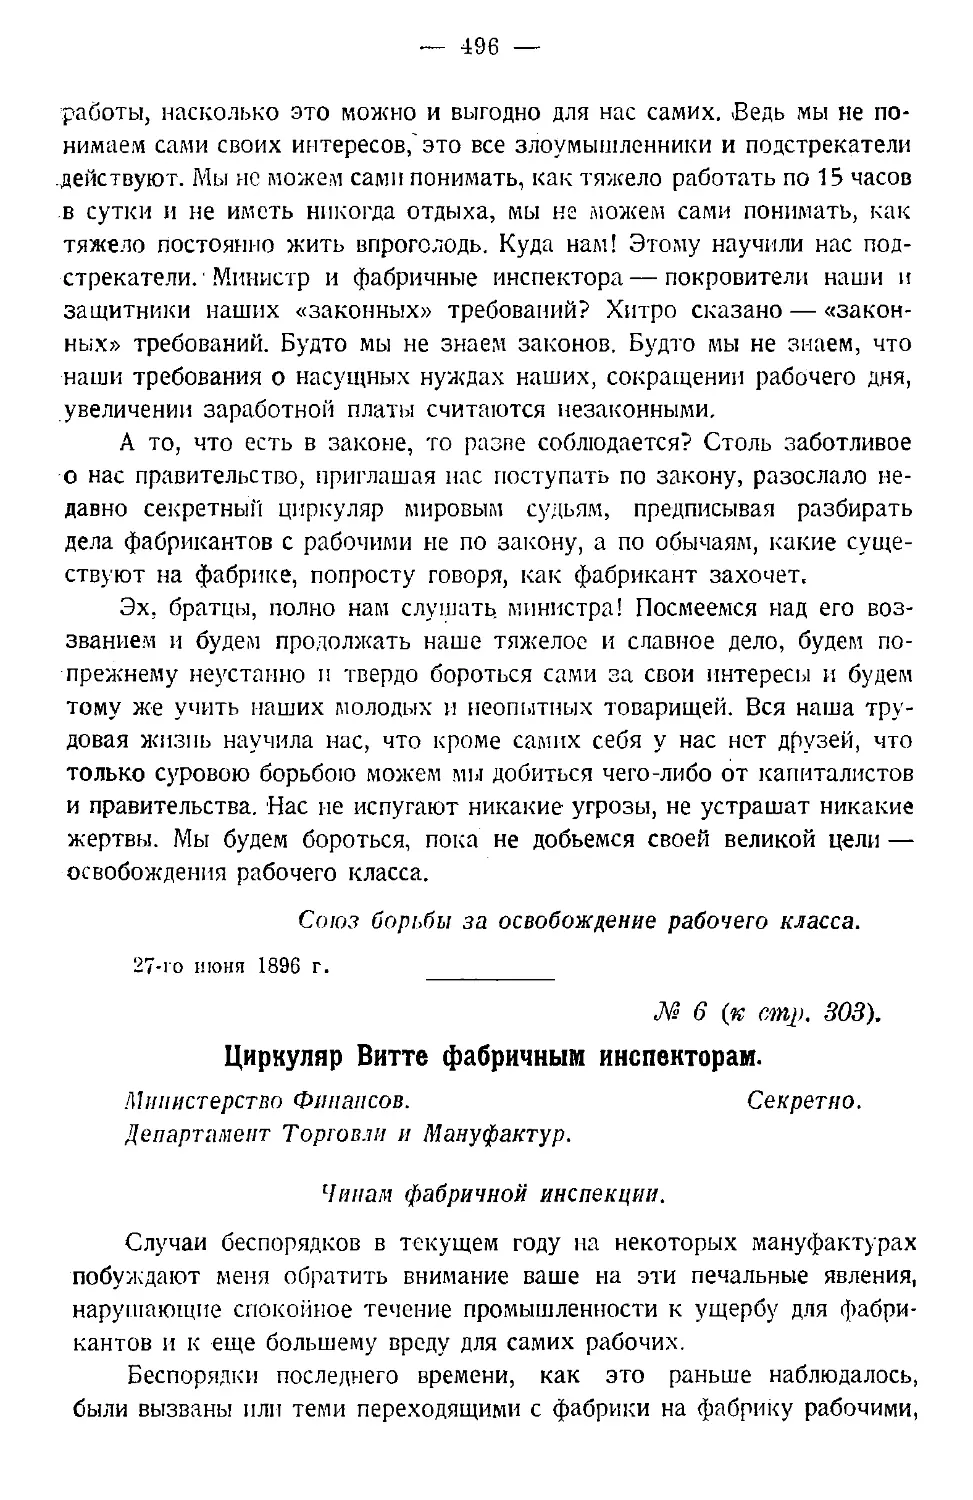 6. Циркуляр Витте фабричным инспекторам — 1896 г.